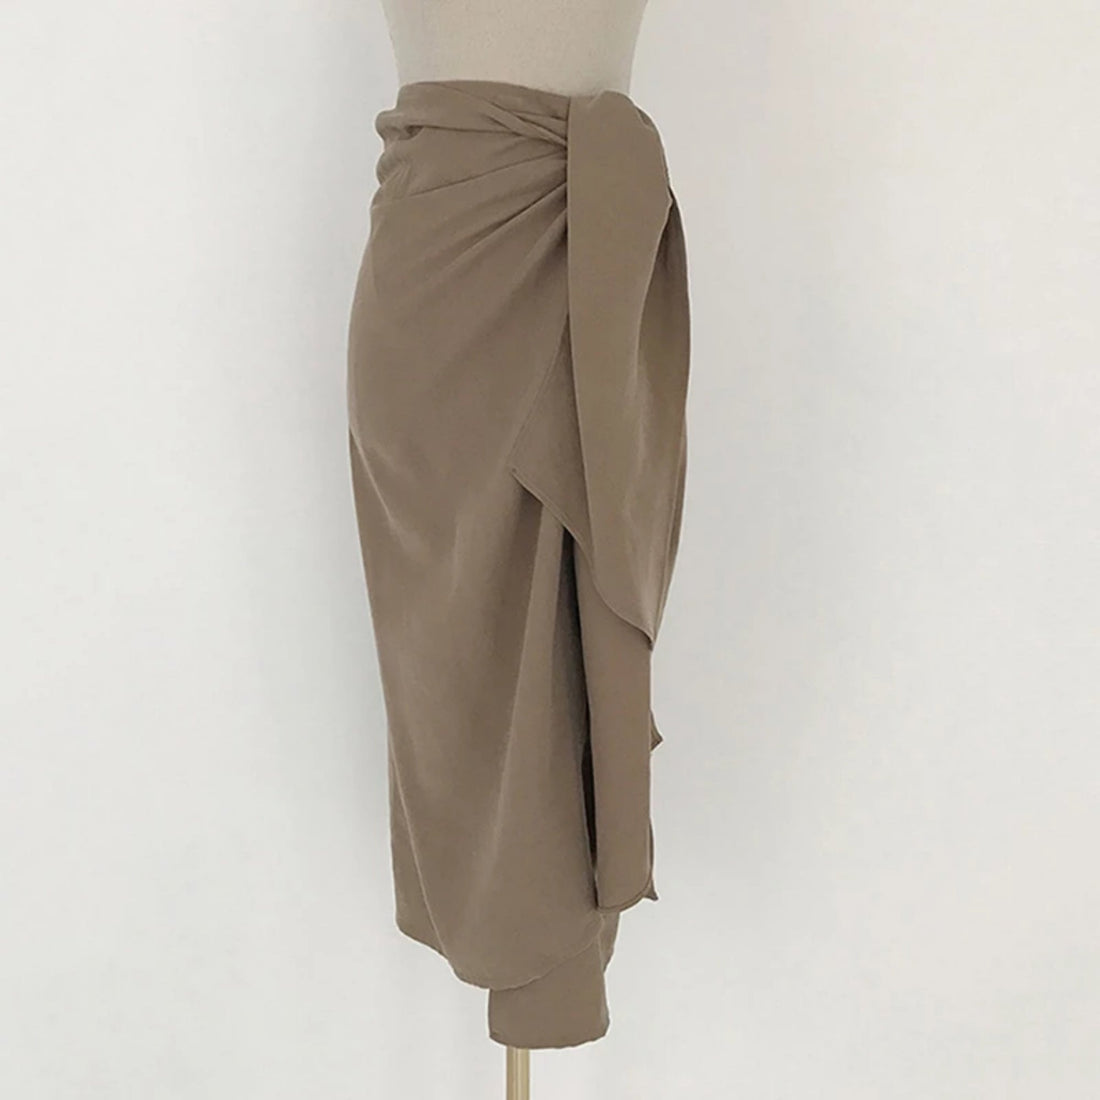 Women's Spring Casual High-Waist Asymmetrical Midi Skirt